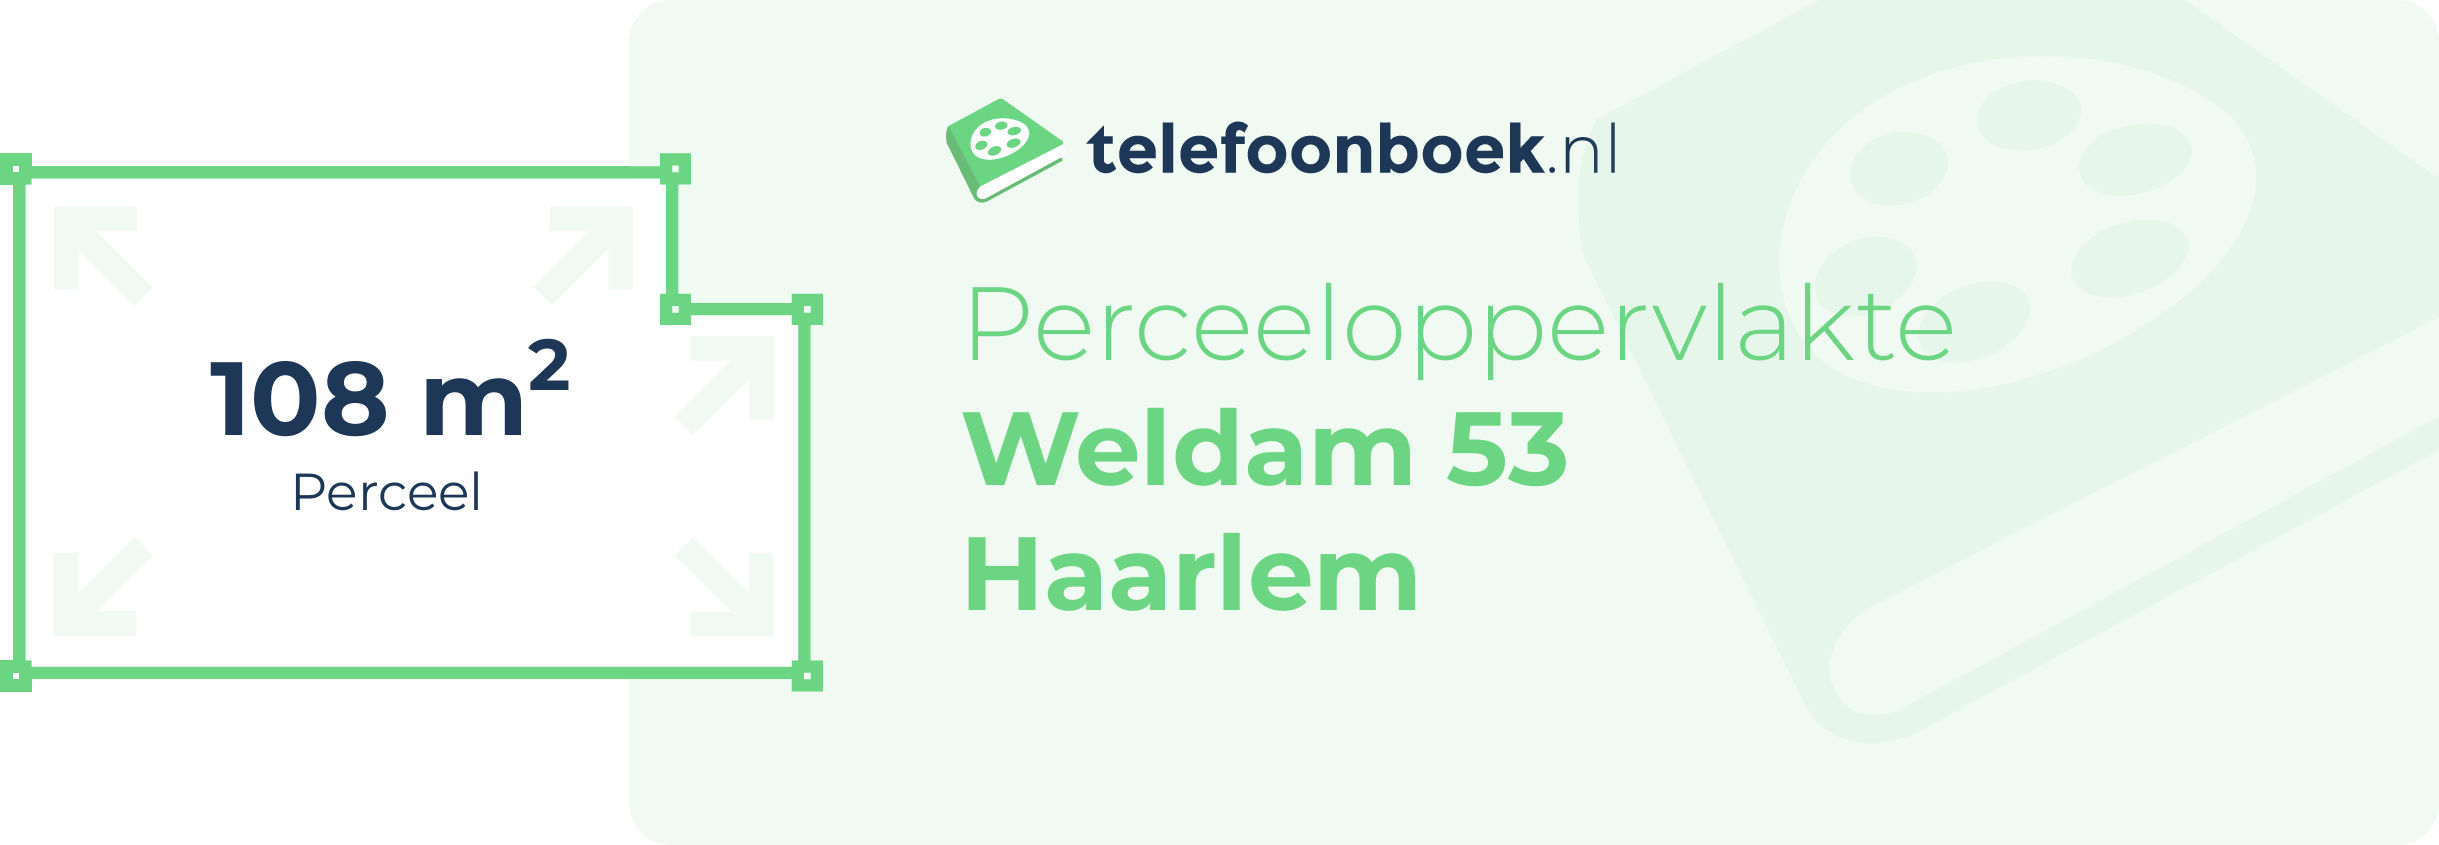 Perceeloppervlakte Weldam 53 Haarlem